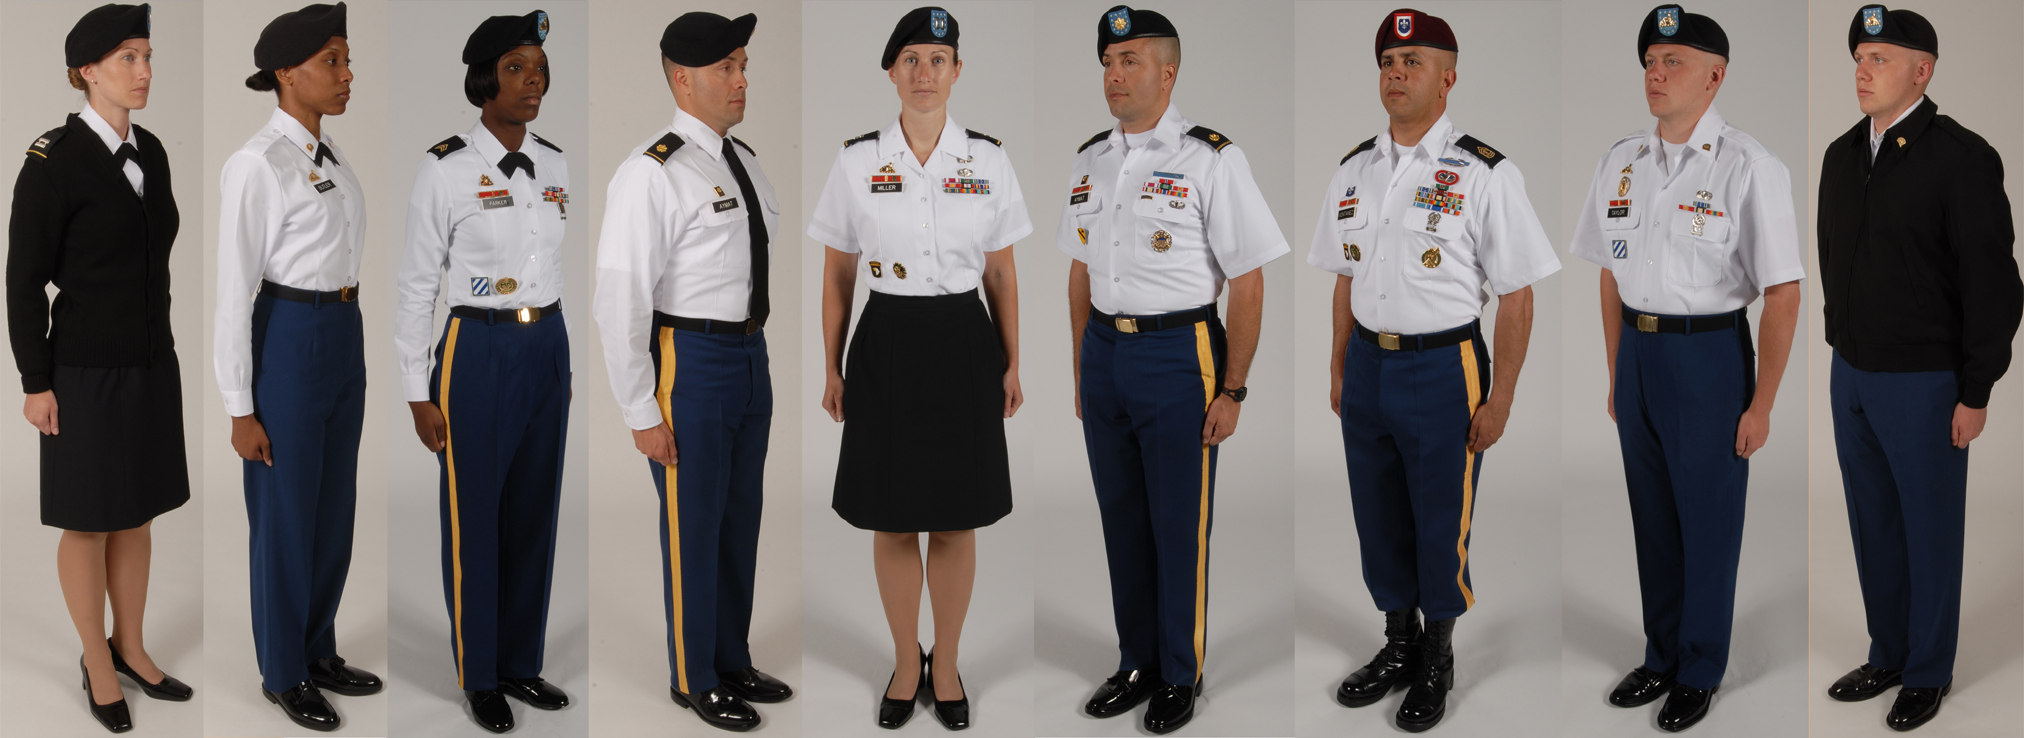 enlisted army class b uniform setup guide